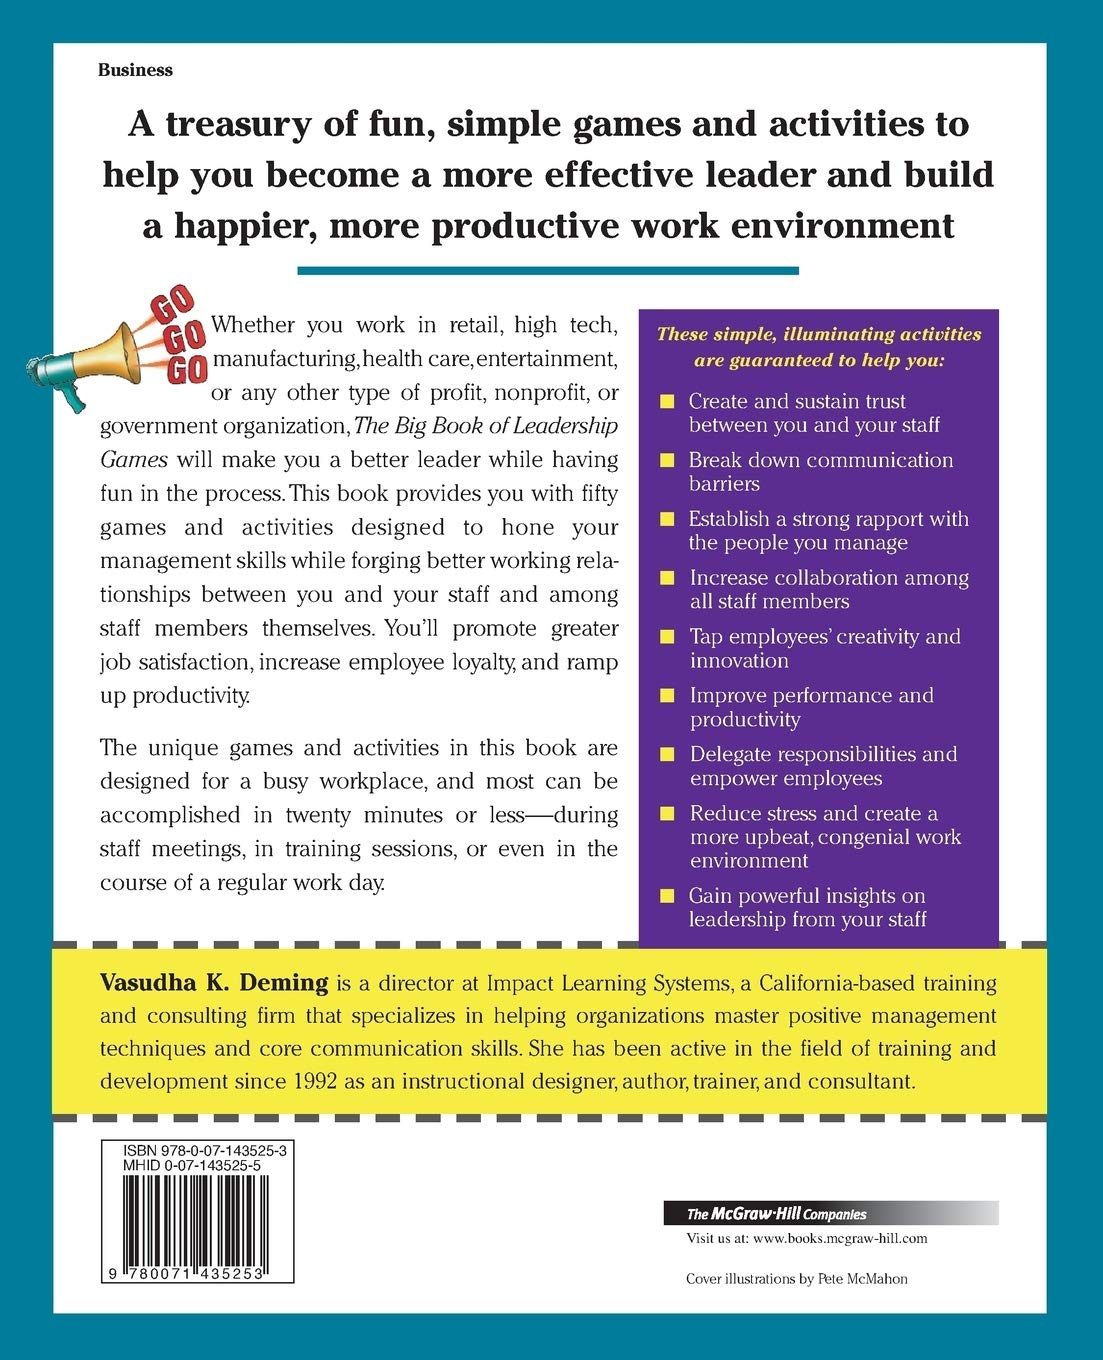 The Big Book of Leadership Games